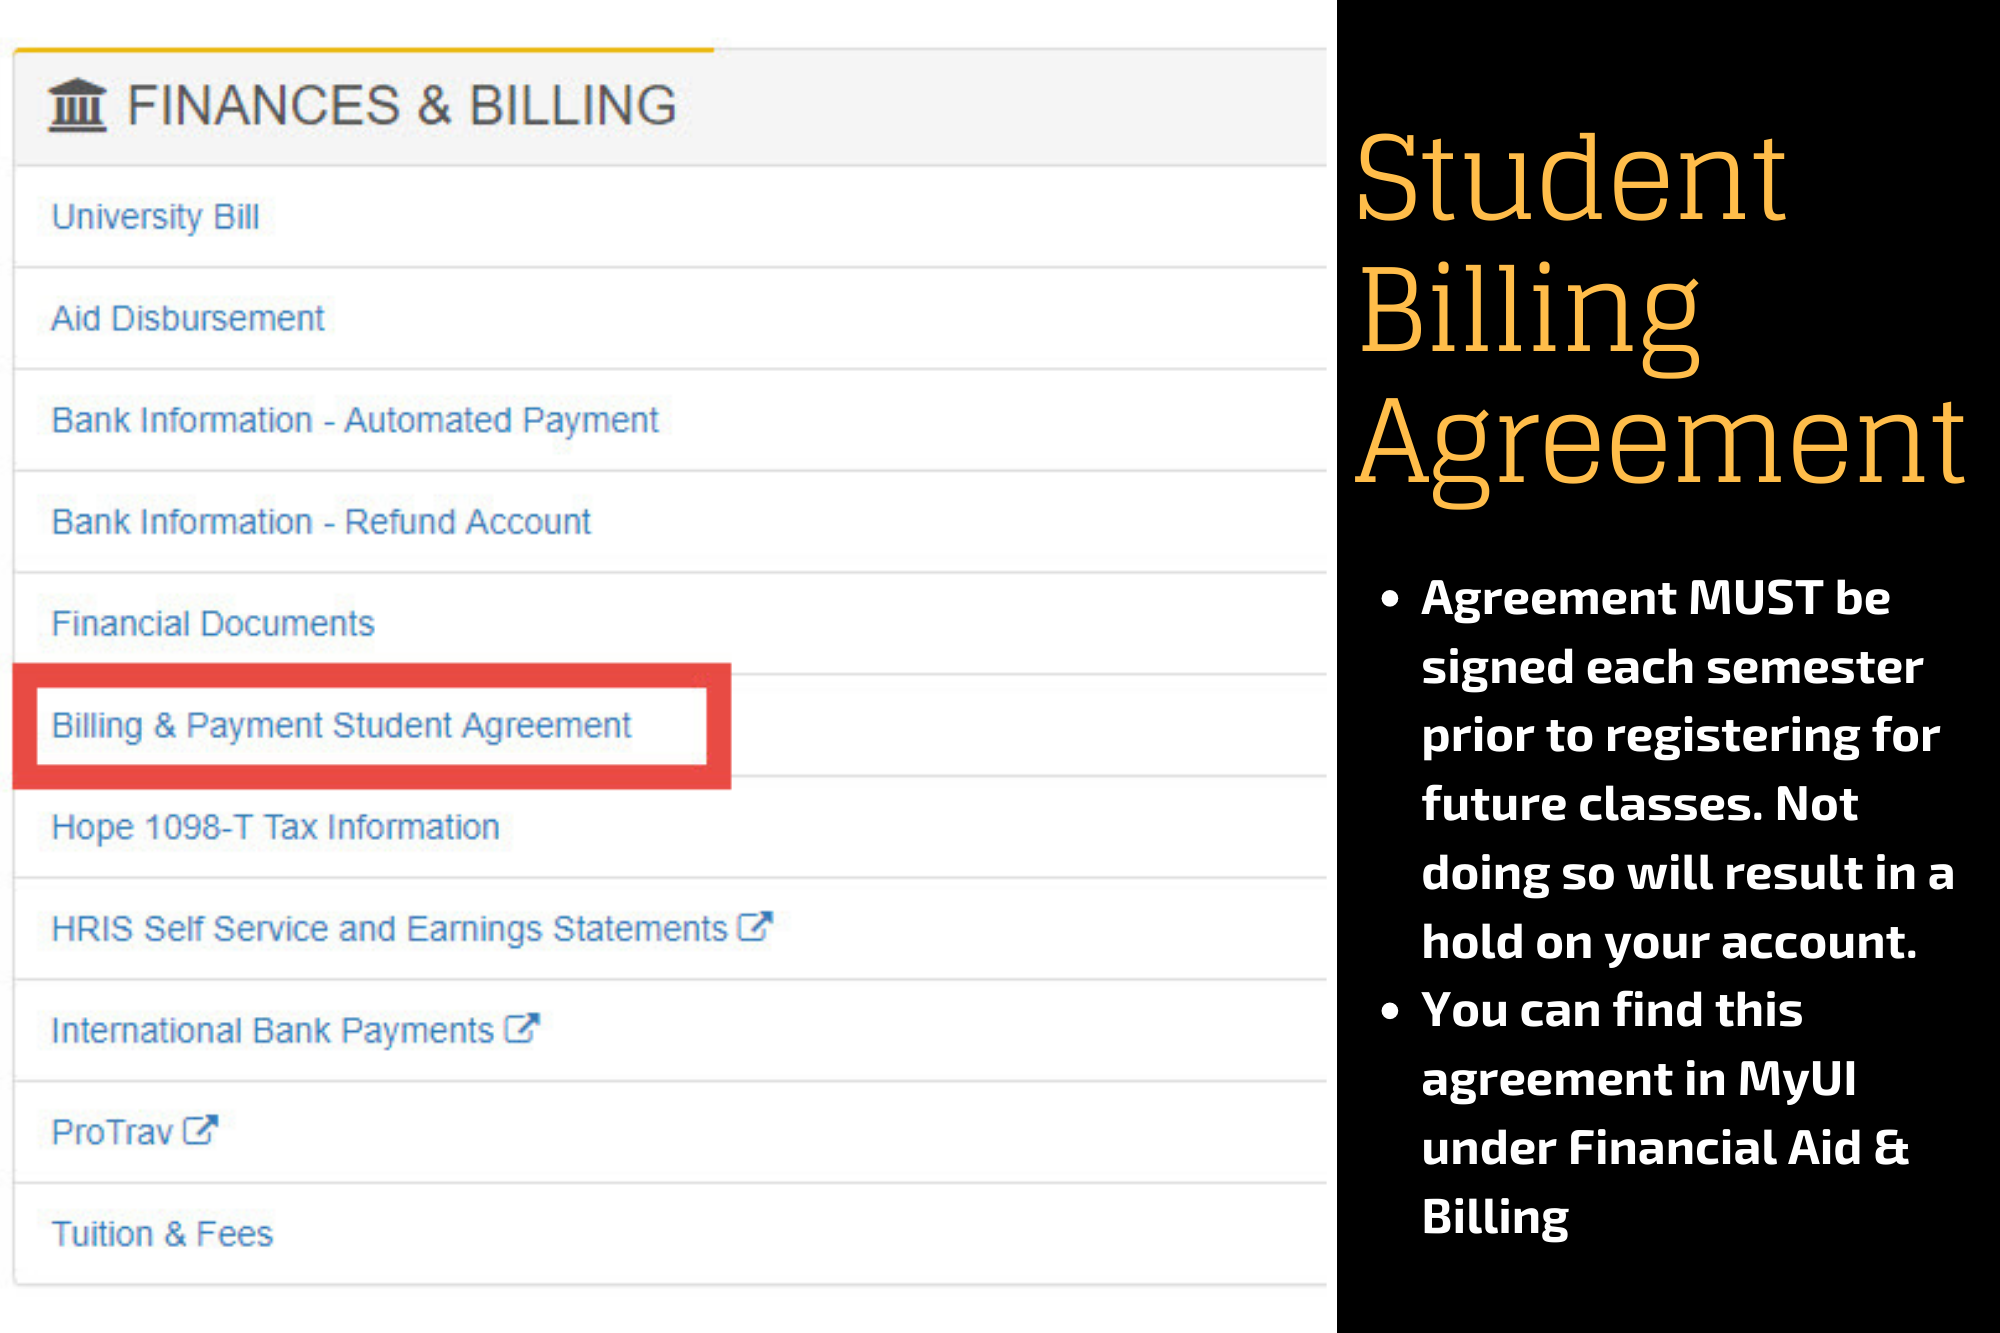 Student Billing Agreement